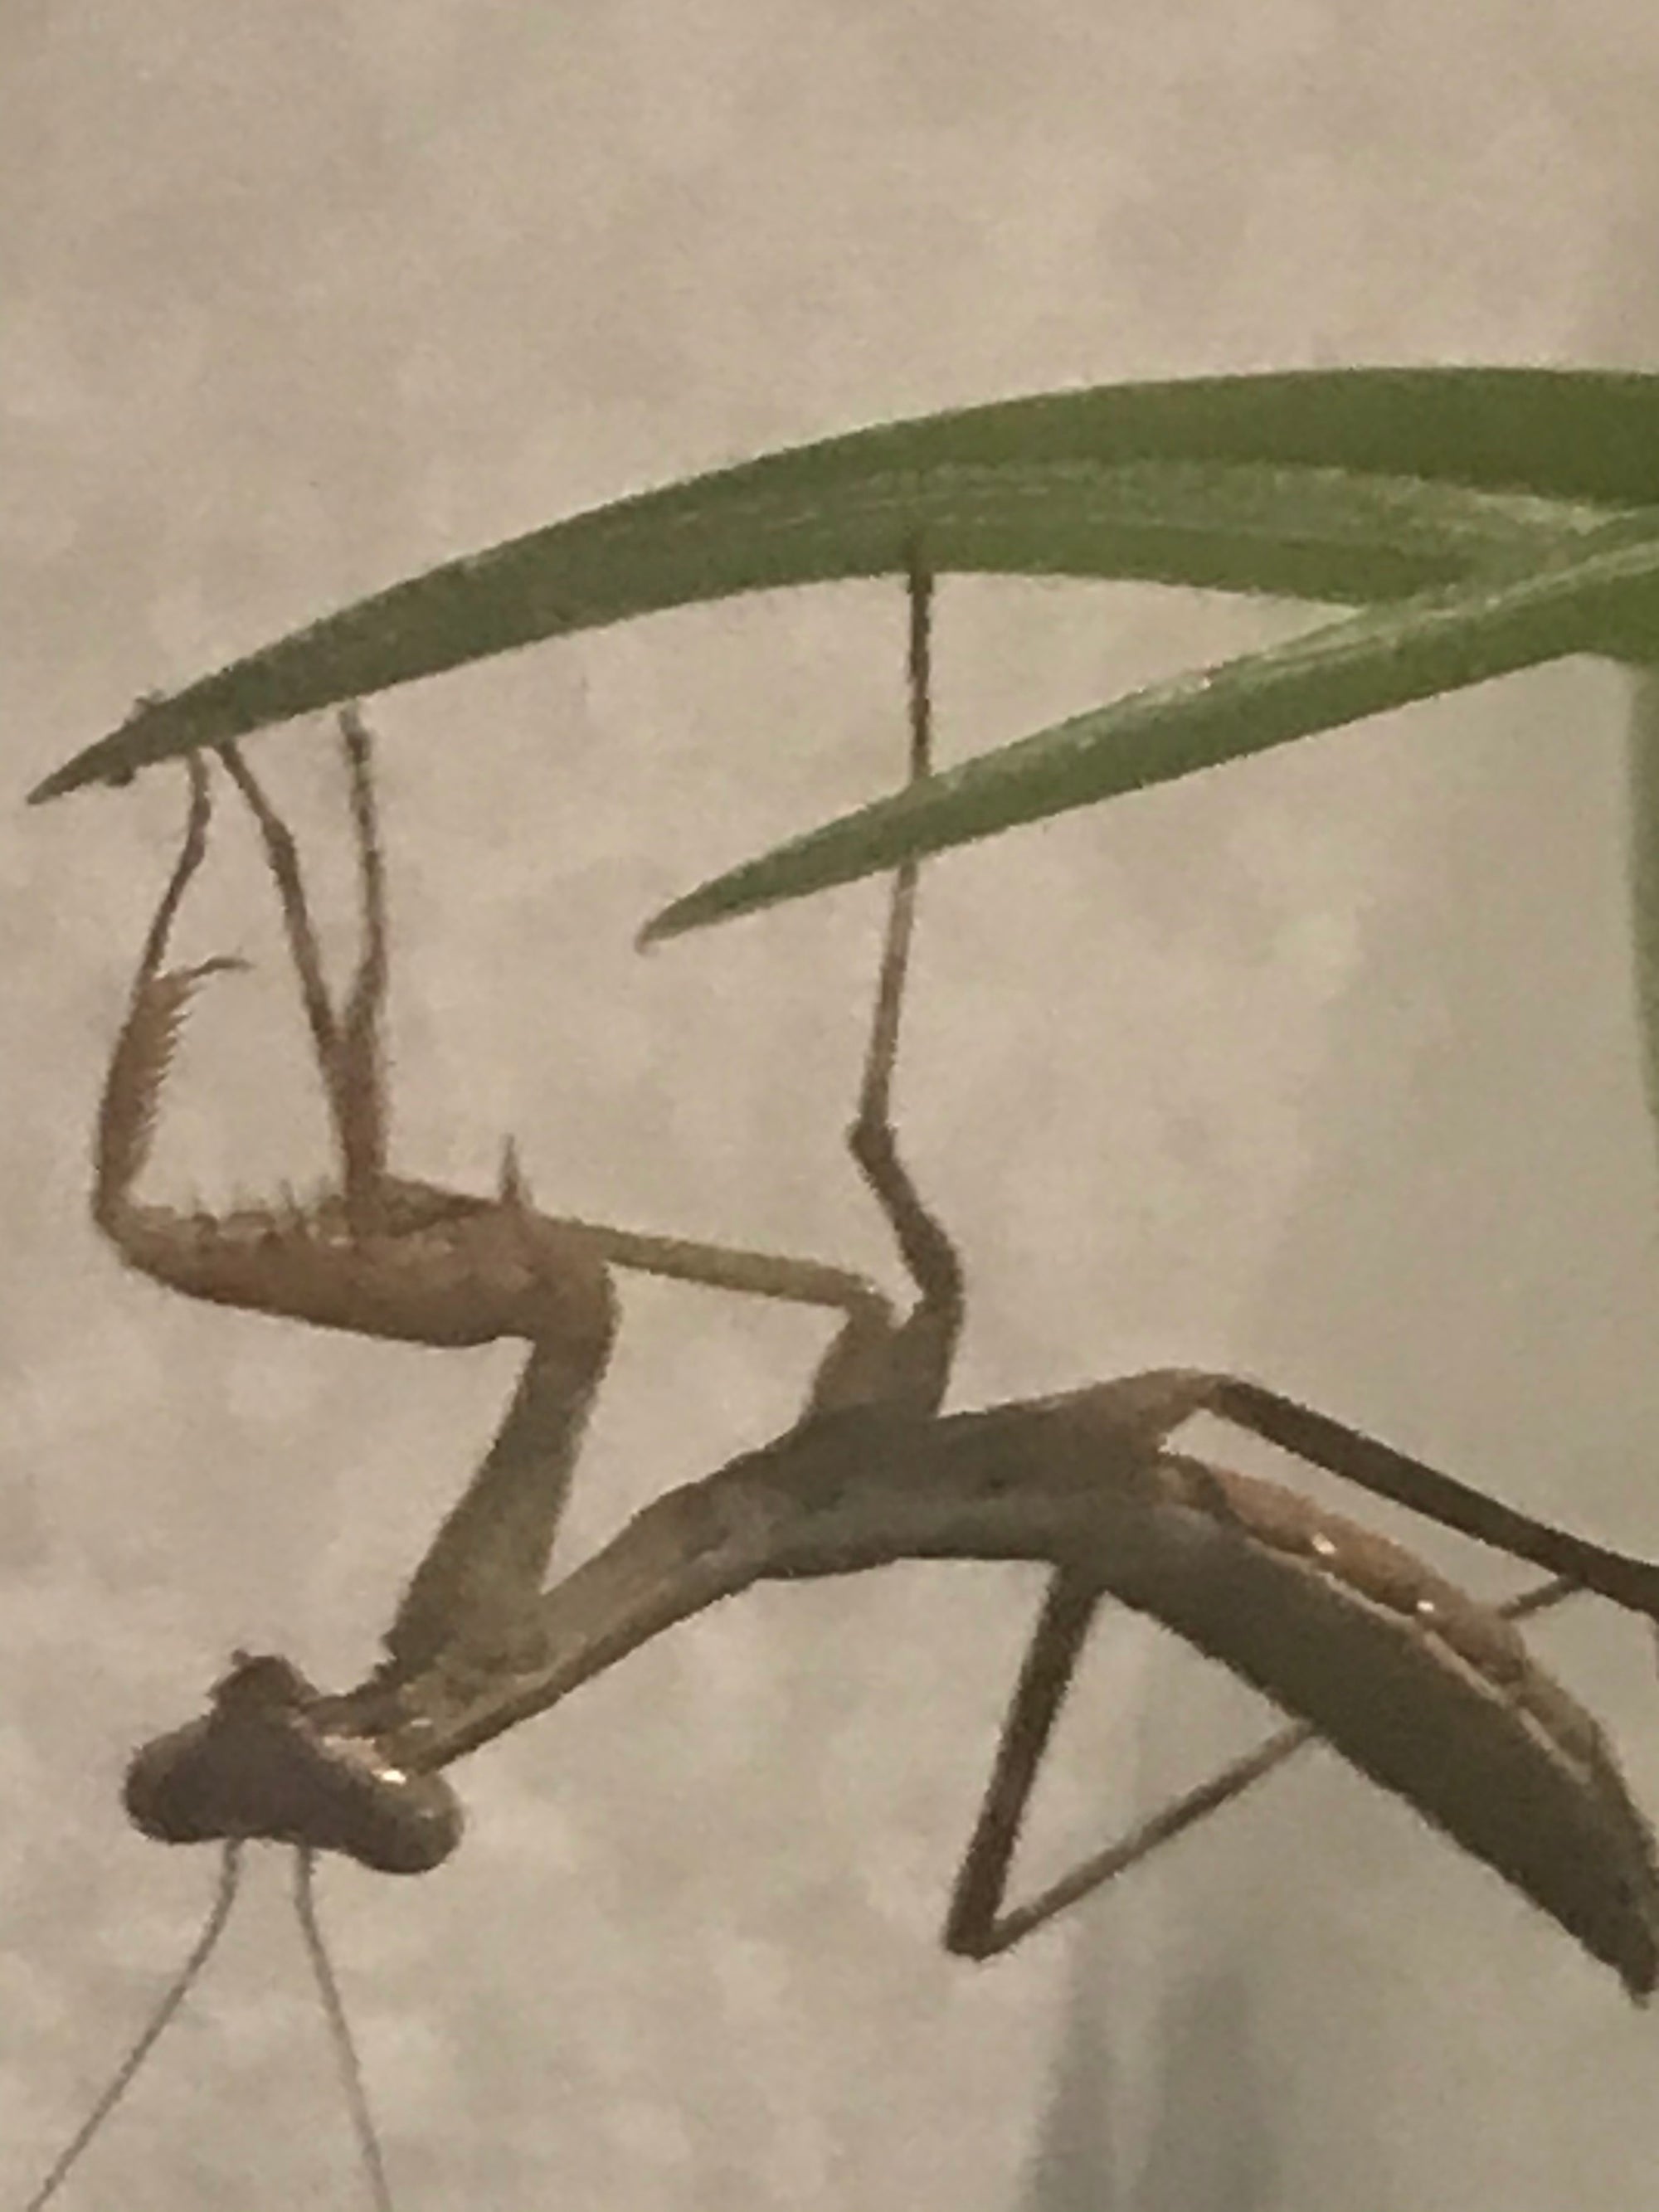 Plistospilota guineensis "Mega Mantis" - USMANTIS